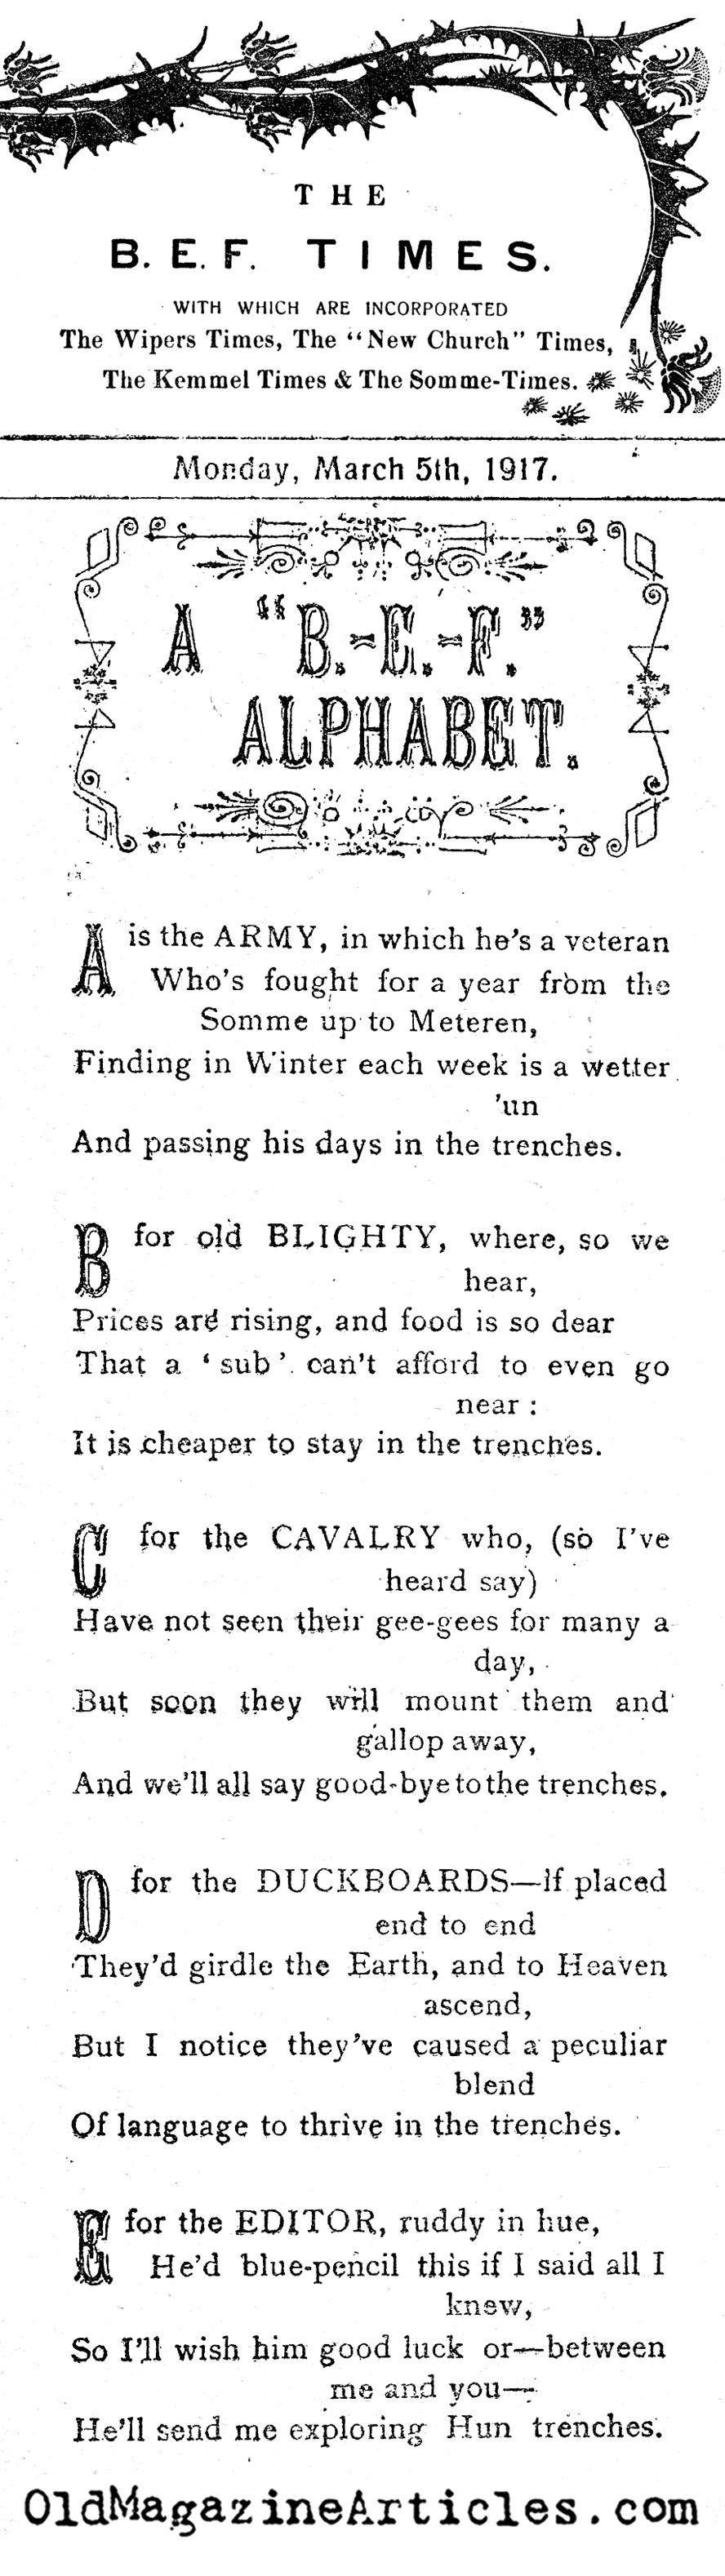 Tommy's Alphabet (The B.E.F. Times, 1917)